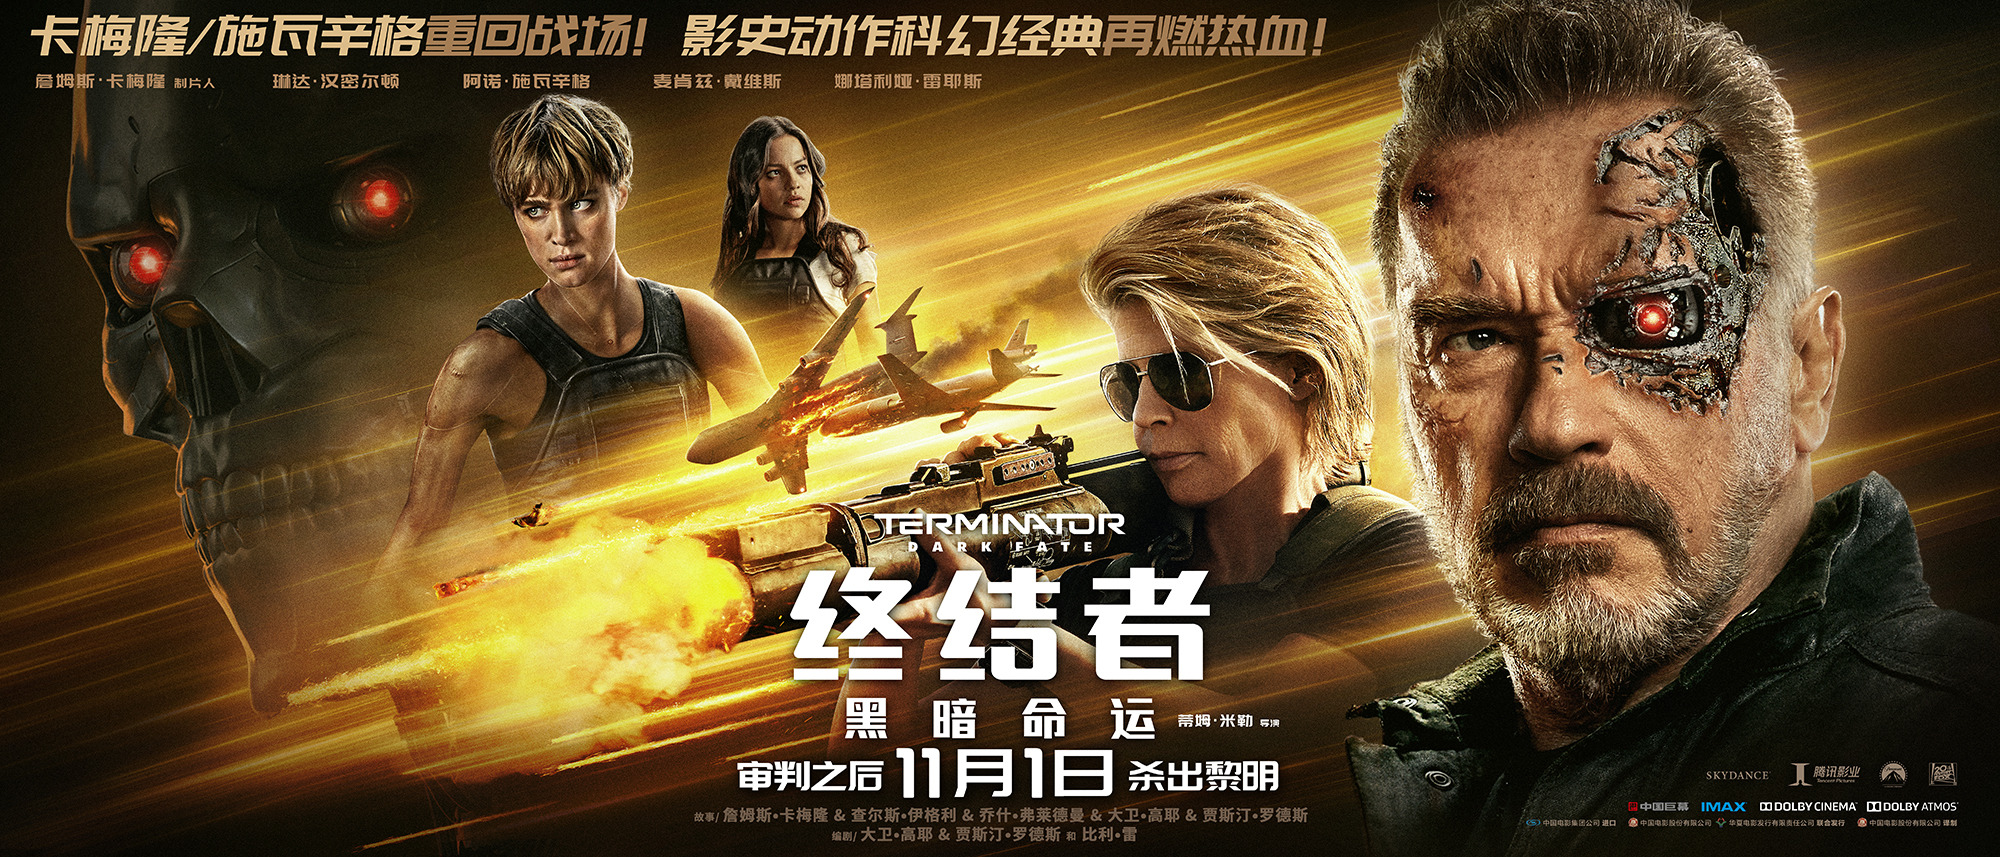 Mega Sized Movie Poster Image for Terminator: Dark Fate (#13 of 15)